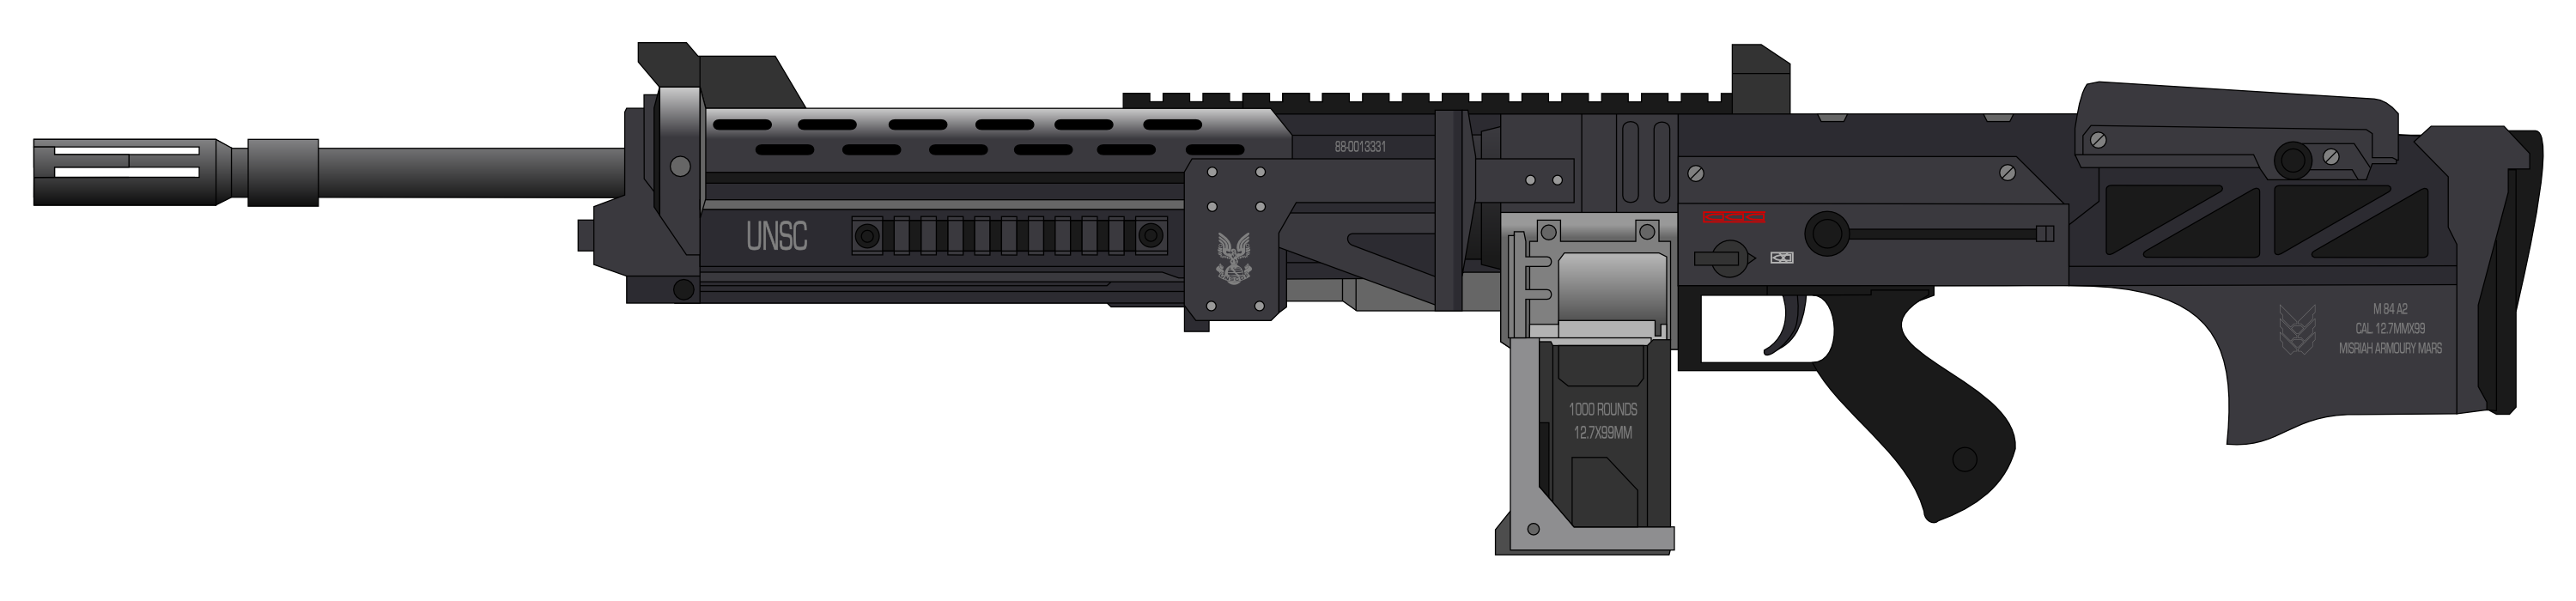 Pin Assault Rifle Clipart Transparent #8 - Assault Rifle, Transparent background PNG HD thumbnail